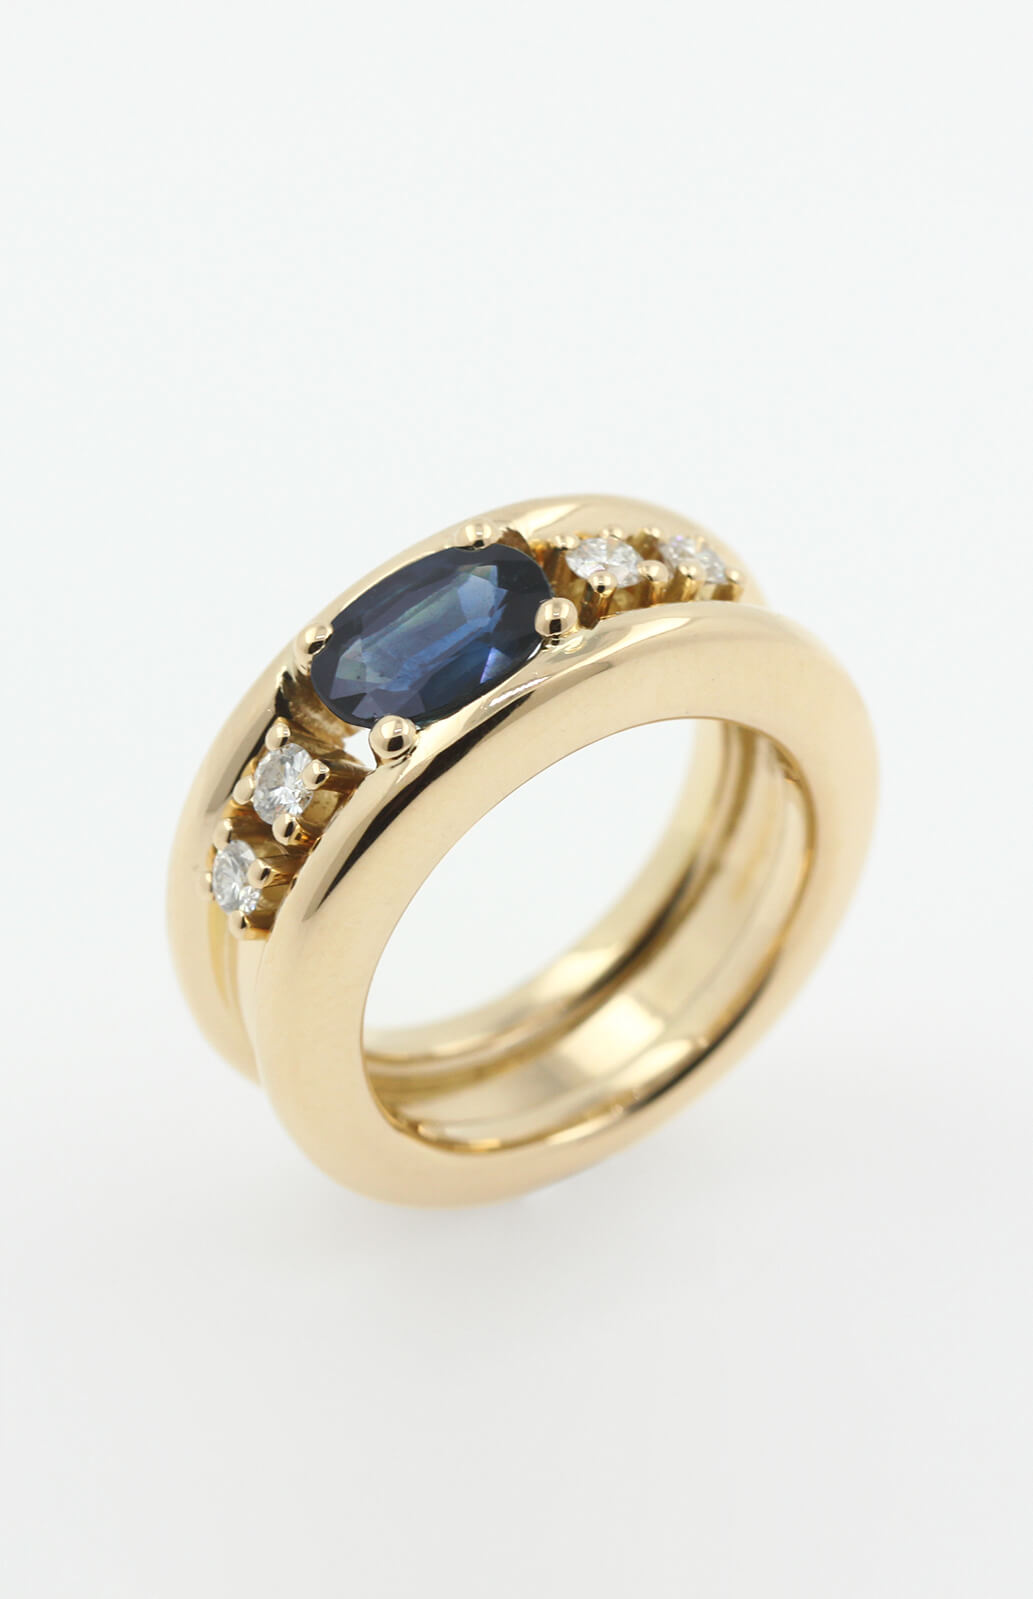 Vintage Saphir Brillant Ring